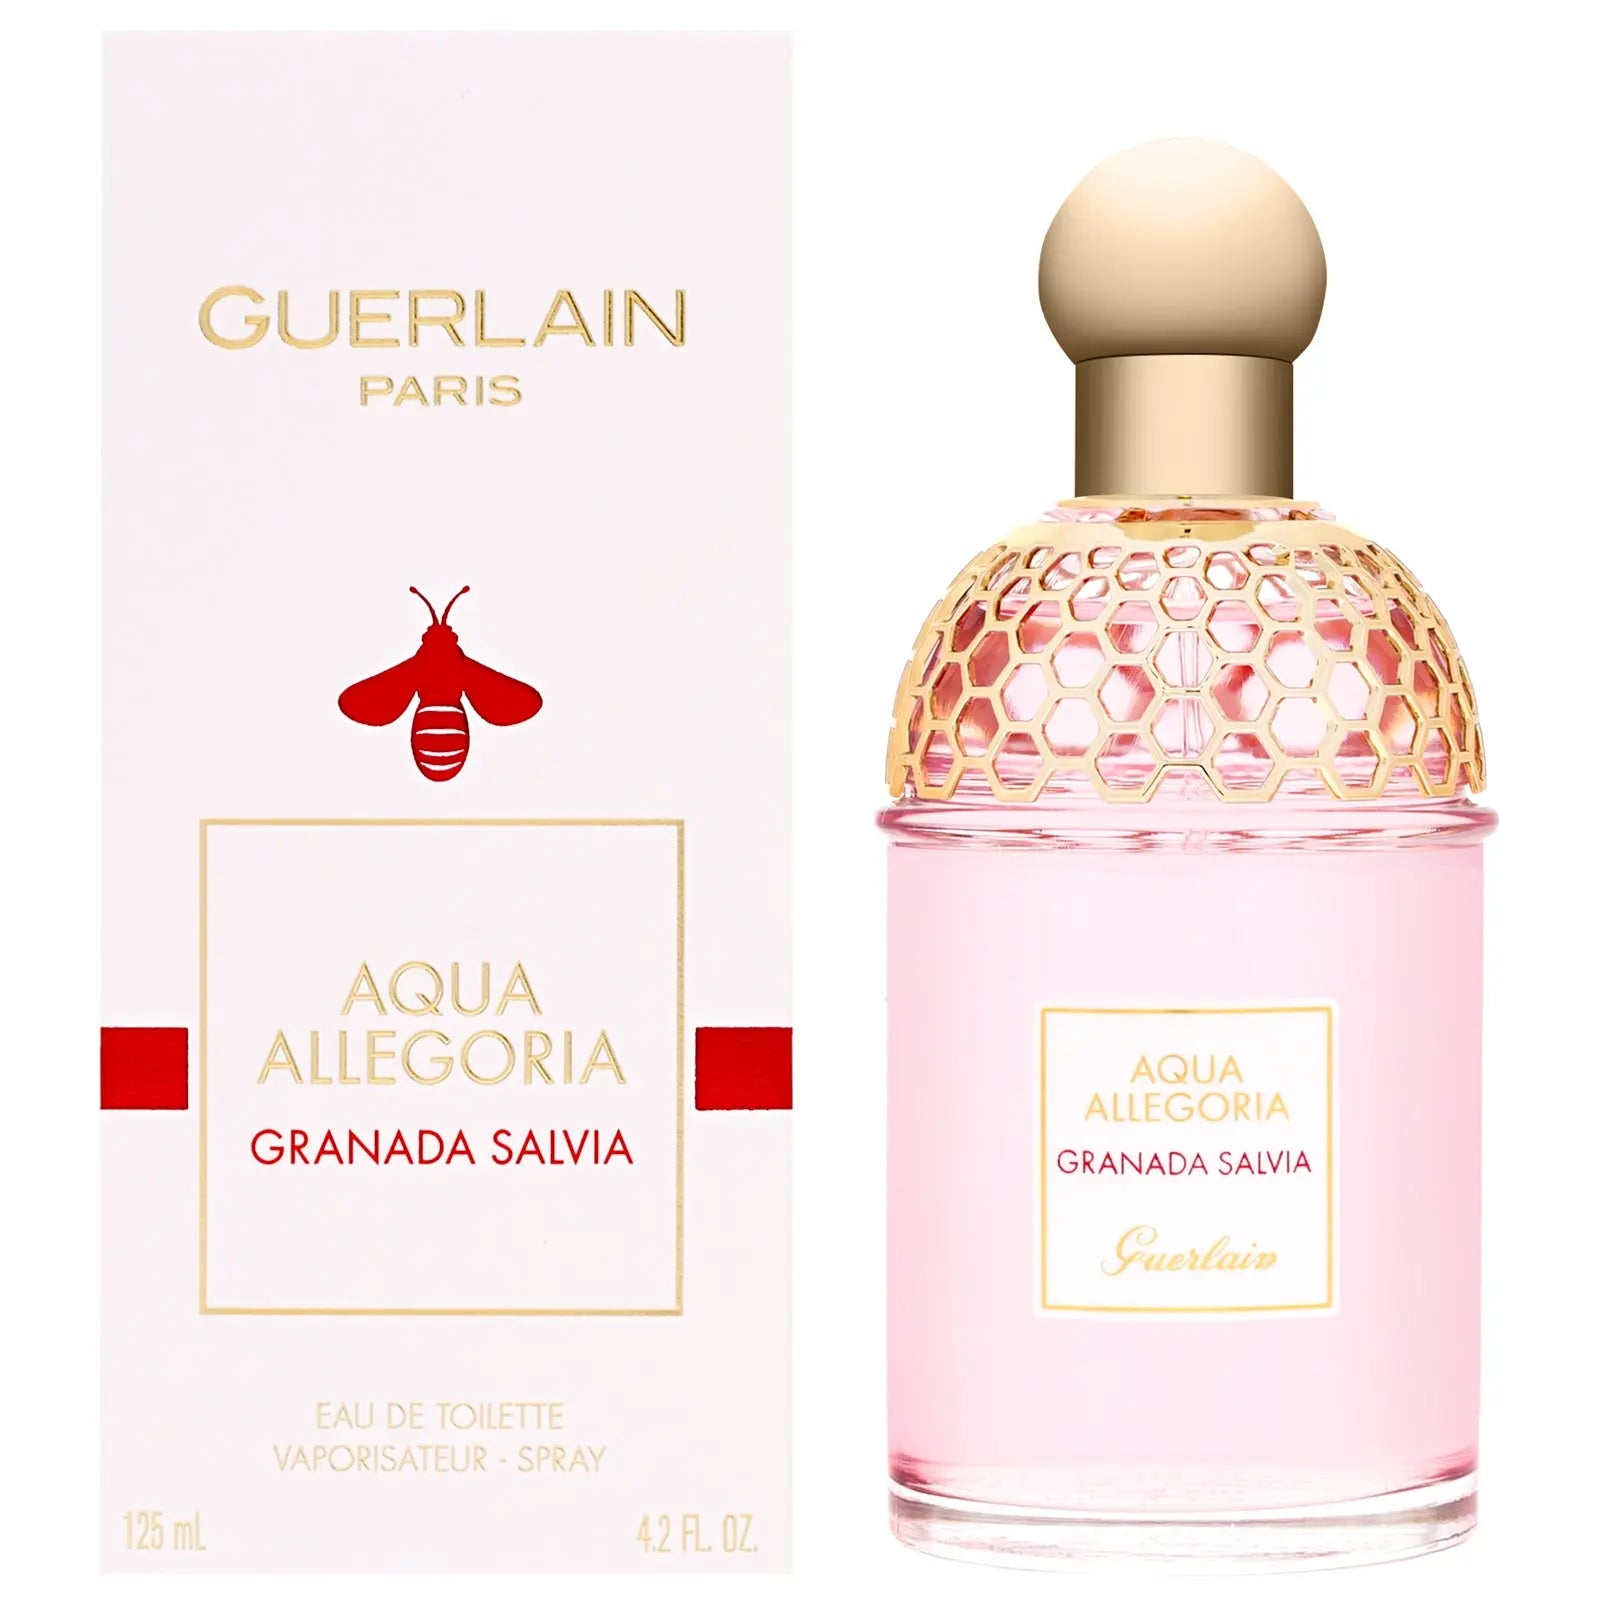 Guerlain Aqua Allegoria Granada Salvia EDt Unisex 125ml Imported Perfumes & Beauty Store